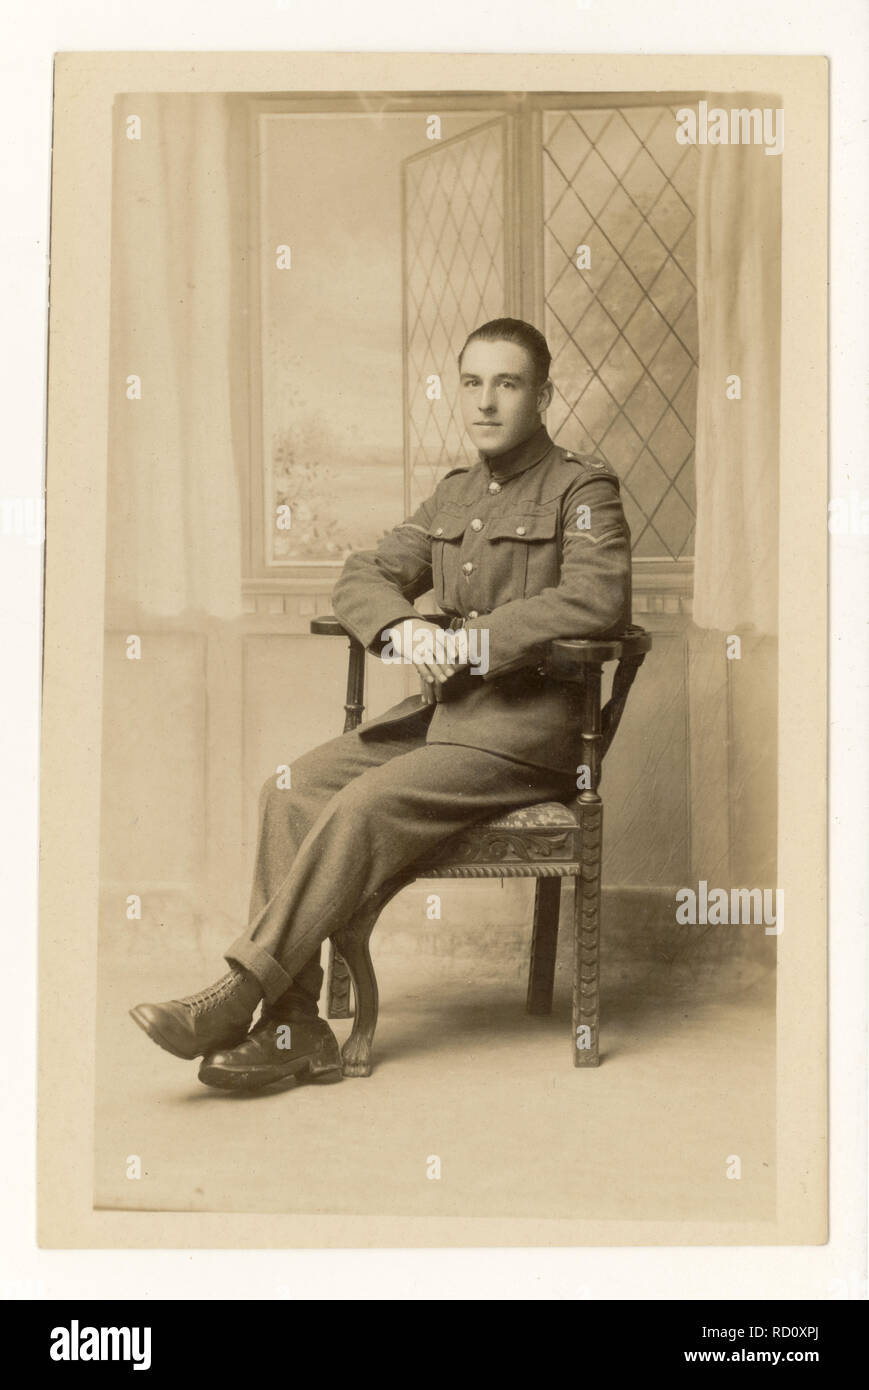 WW1 era postcard studio portrait of young soldier in uniform called Percy, dated 10 Nov 1917, U.K. Stock Photo